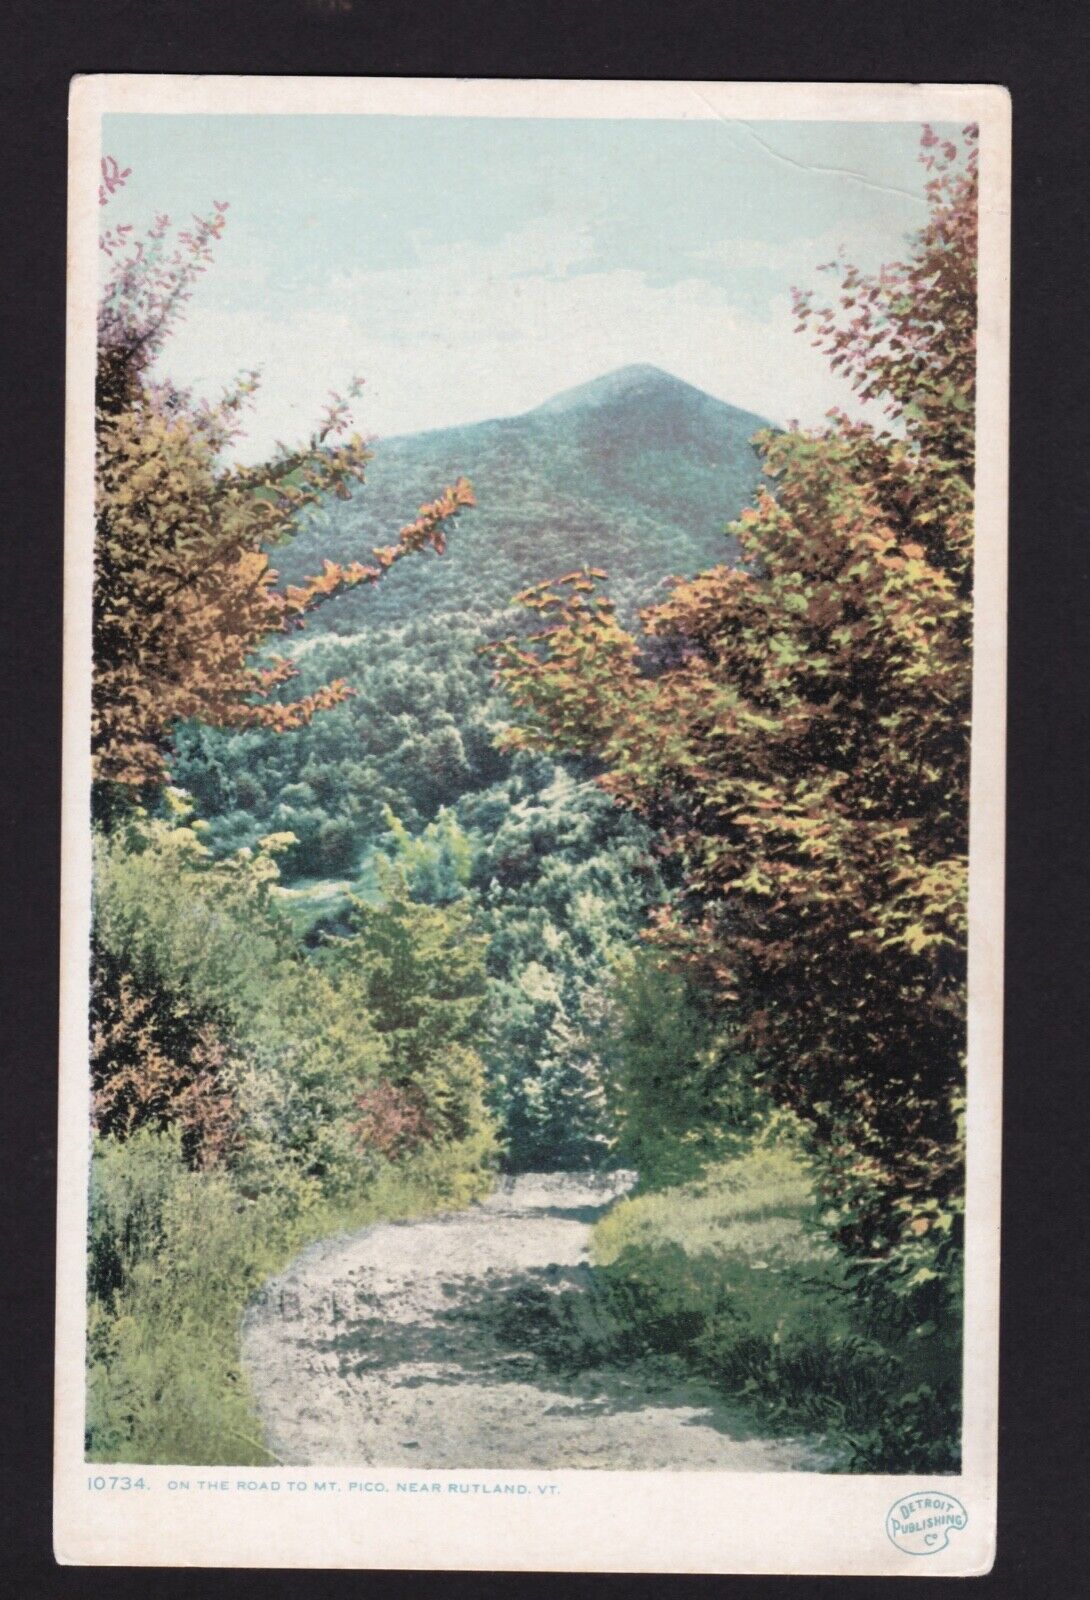 c1908 On the road to Mt. Pico near Rutland Vermont postcard